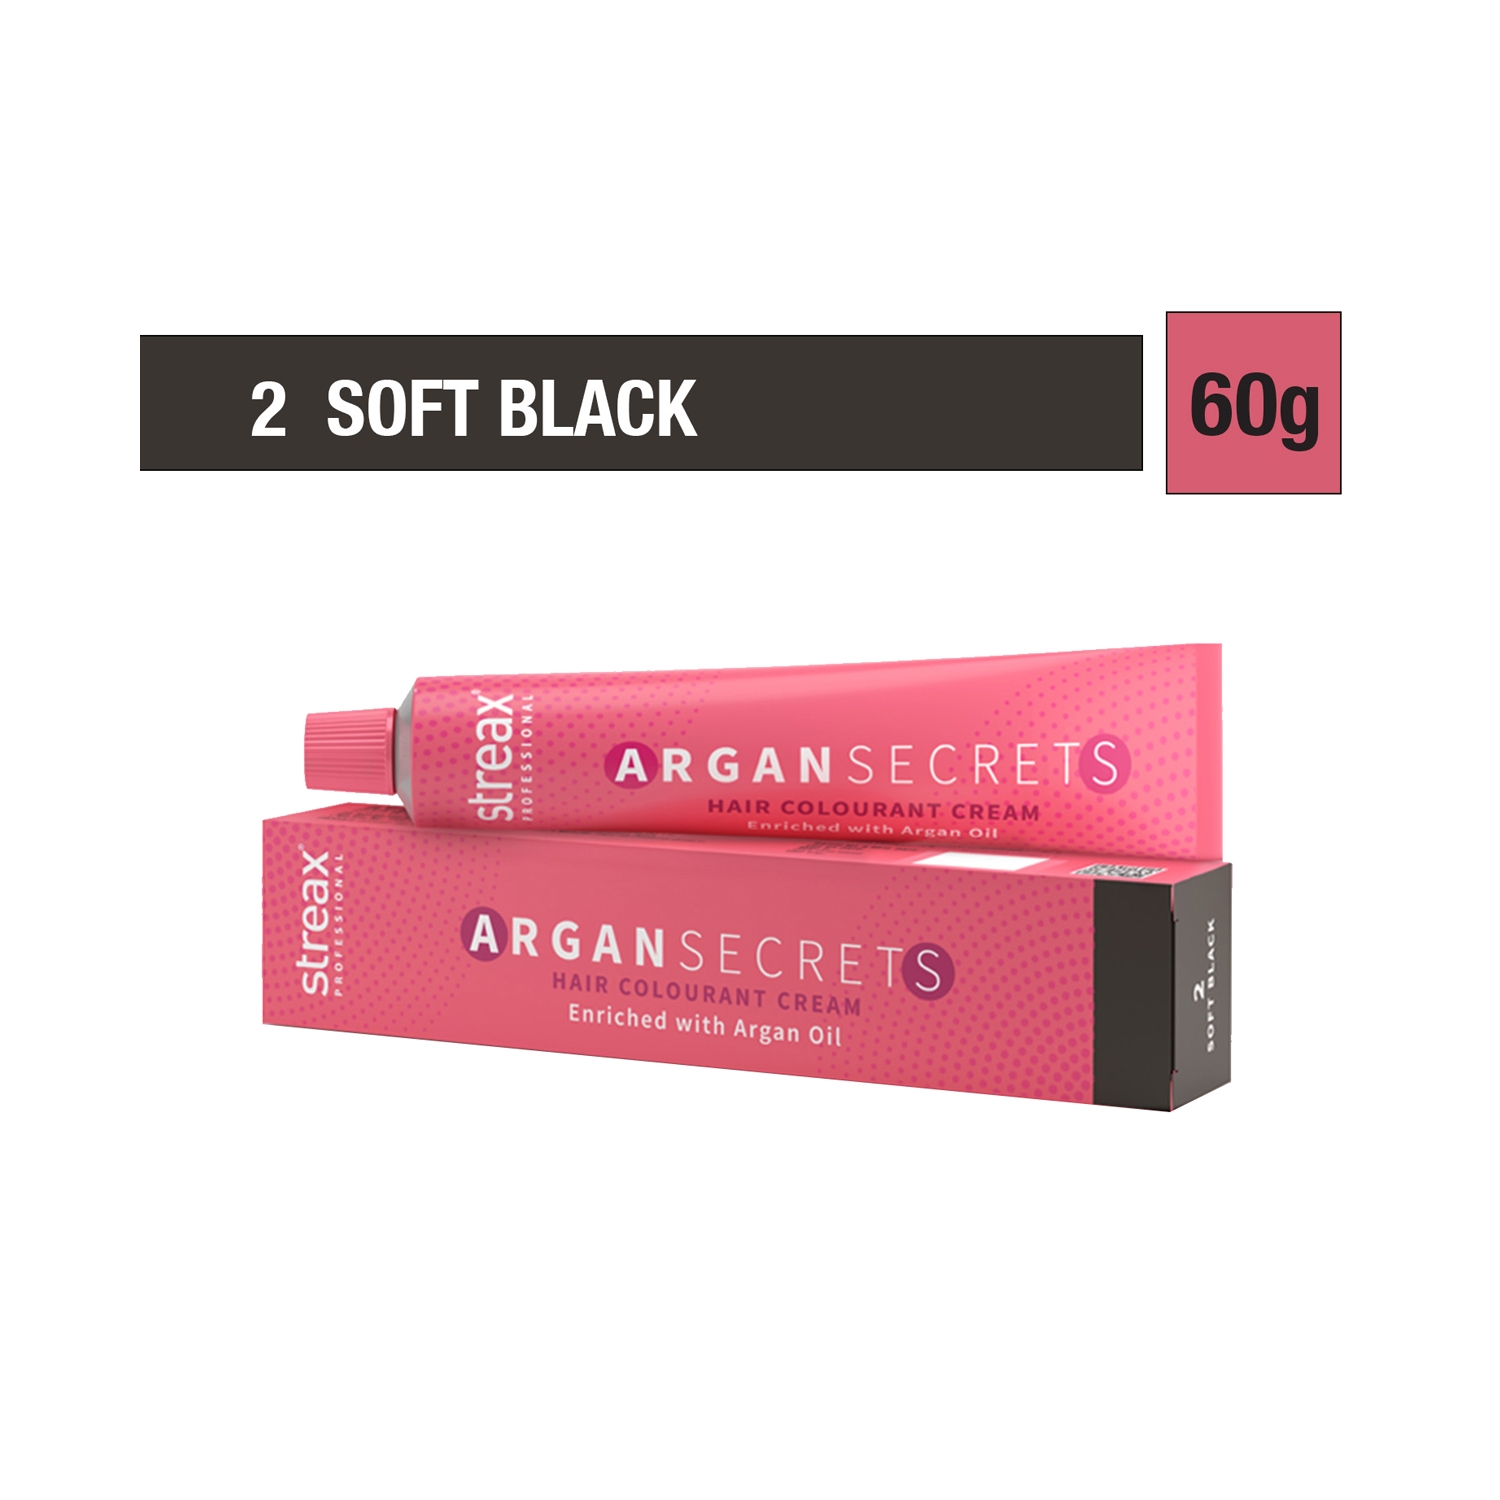 Streax Professional Argan Secrets Hair Colorant Cream - 2 Soft Black (60g)